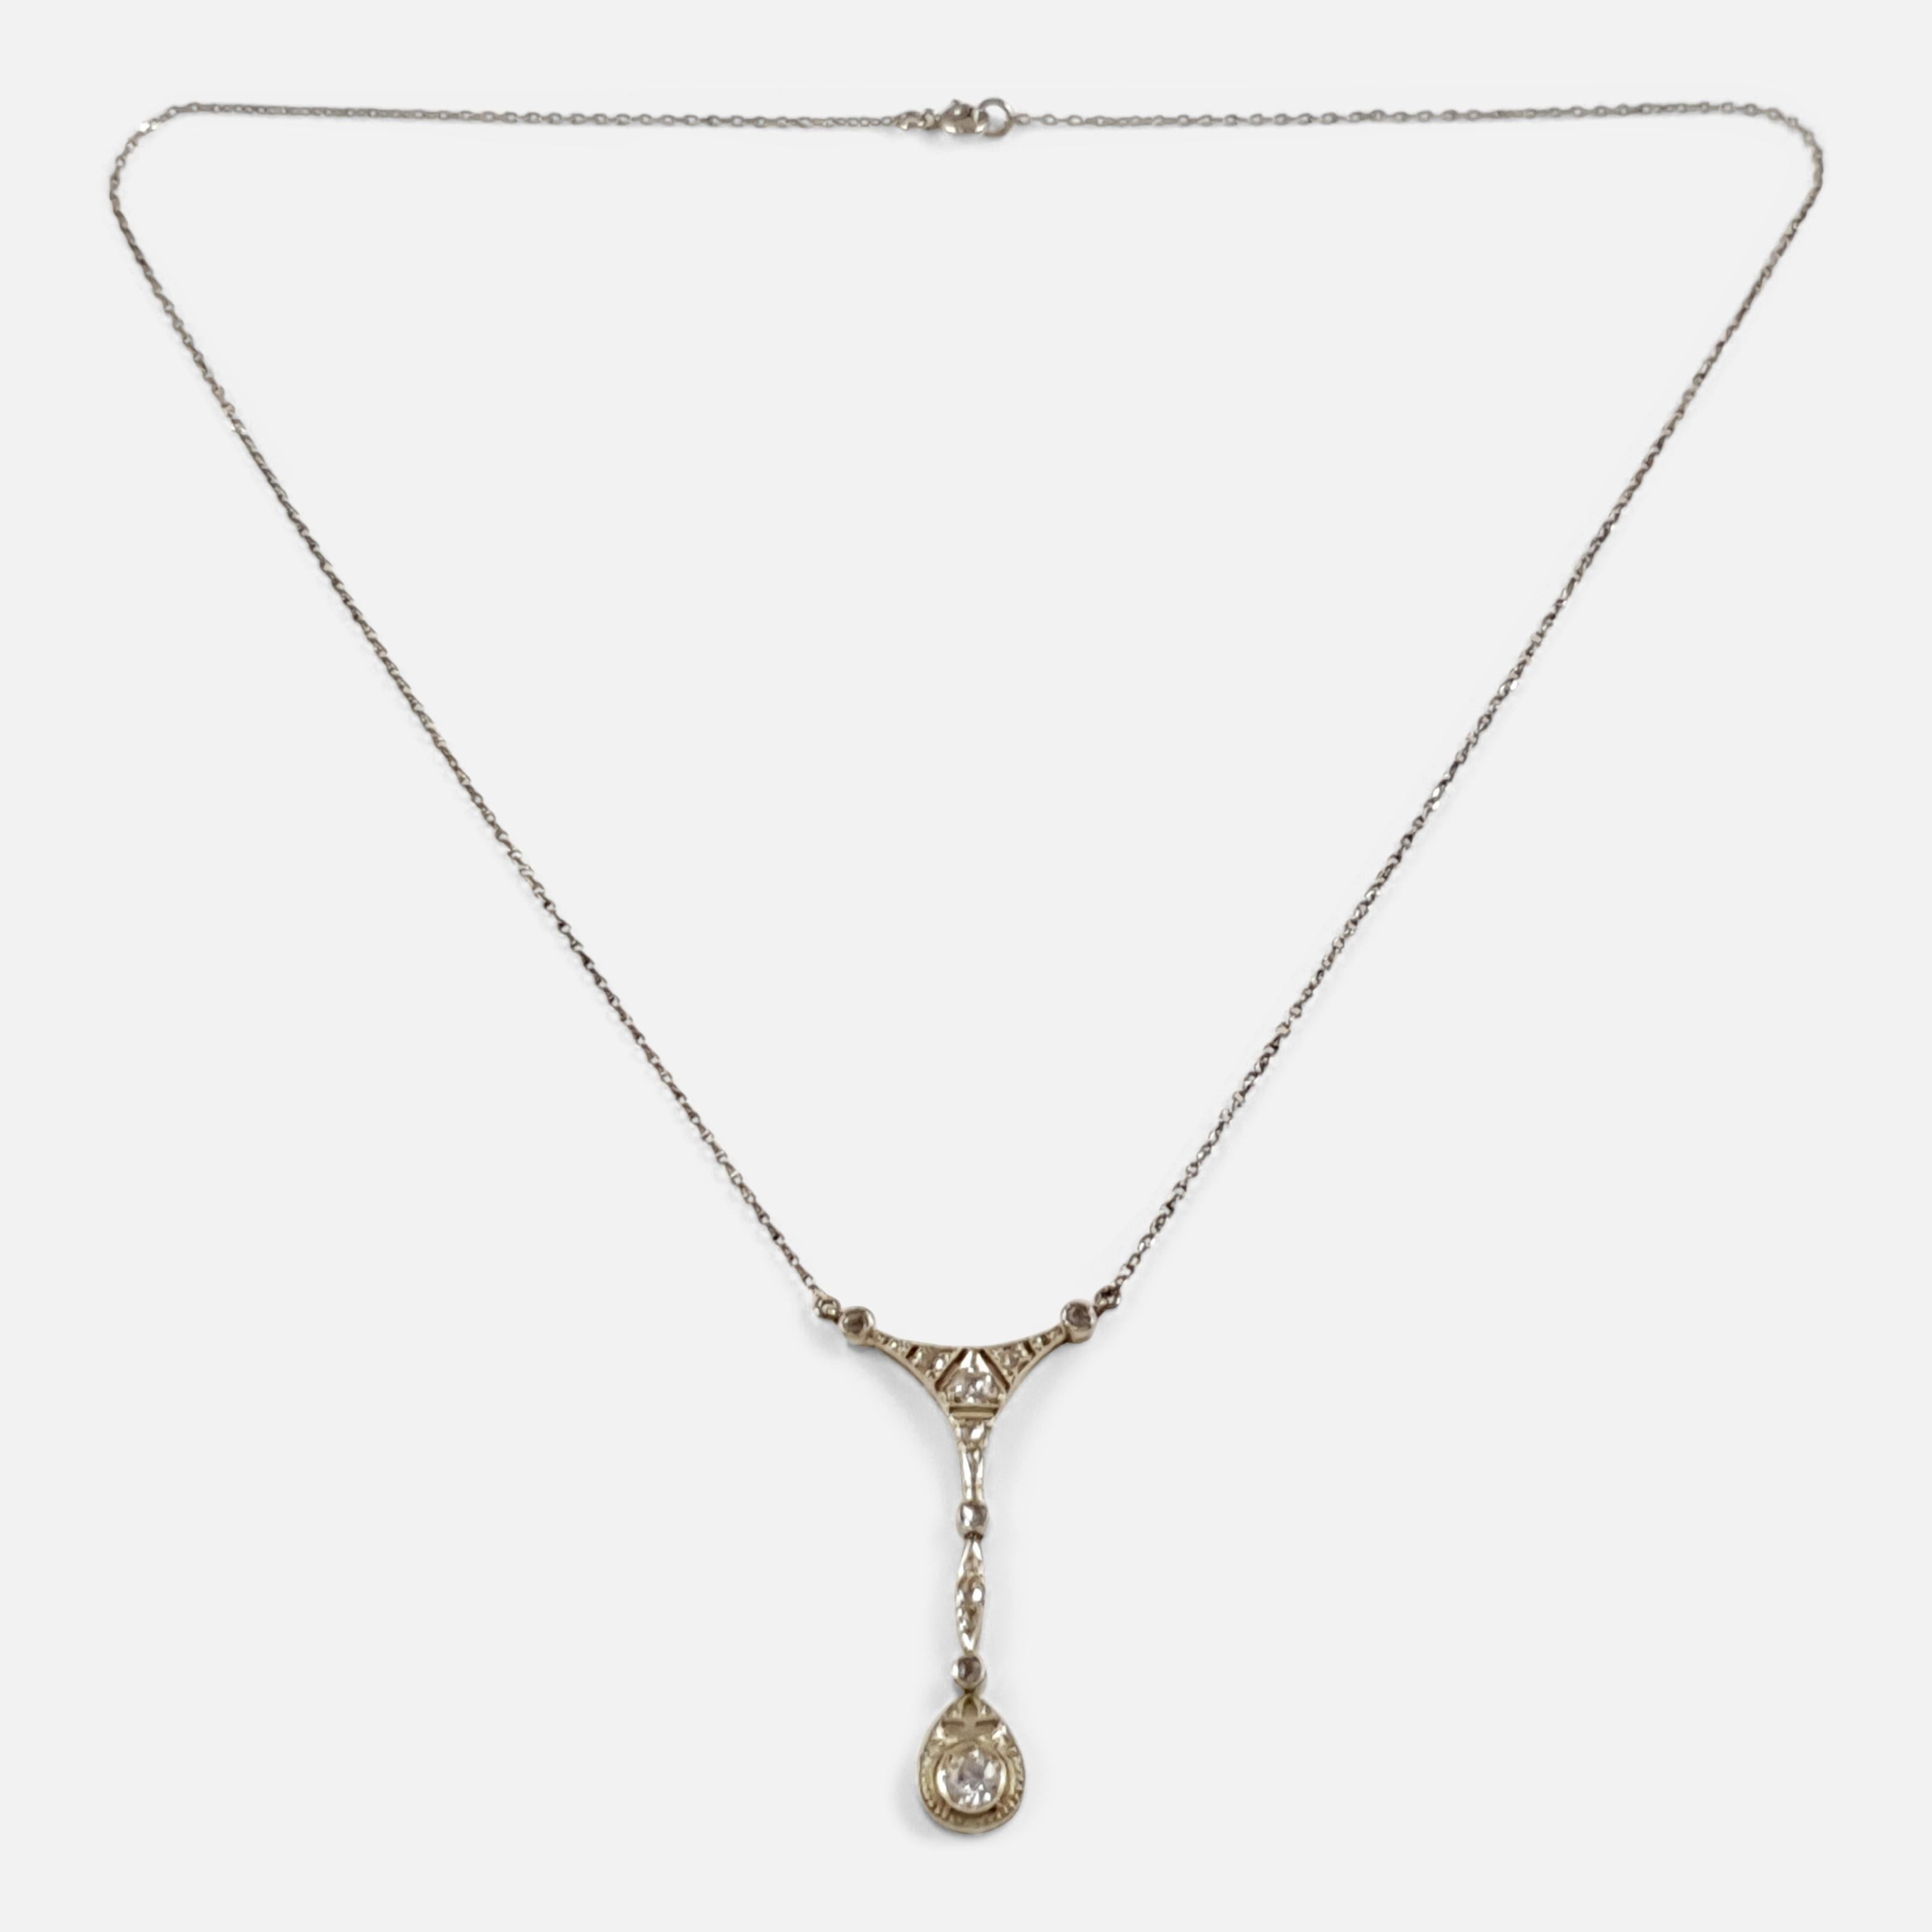 Women's Belle Époque White Gold and Diamond Pendant Necklace, circa 1905